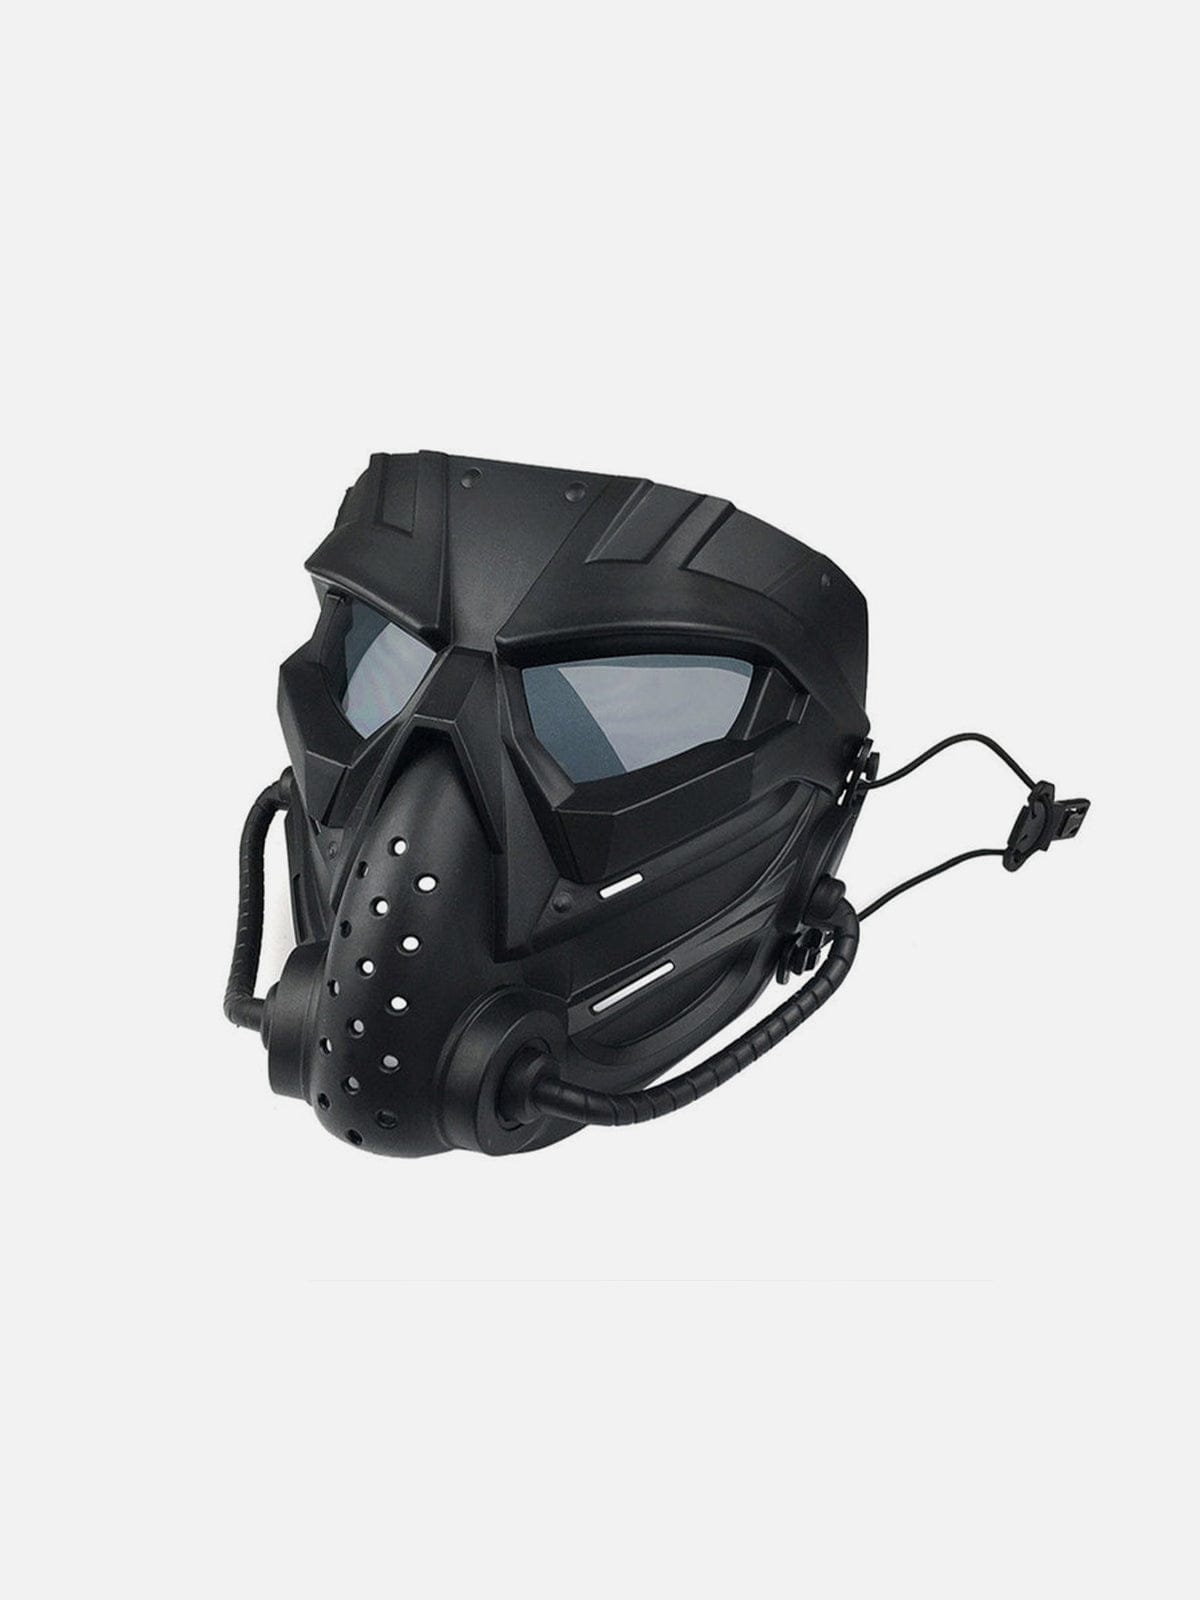 Punk Tactical Alien Full Face Mask Streetwear Brand Techwear Combat Tactical YUGEN THEORY